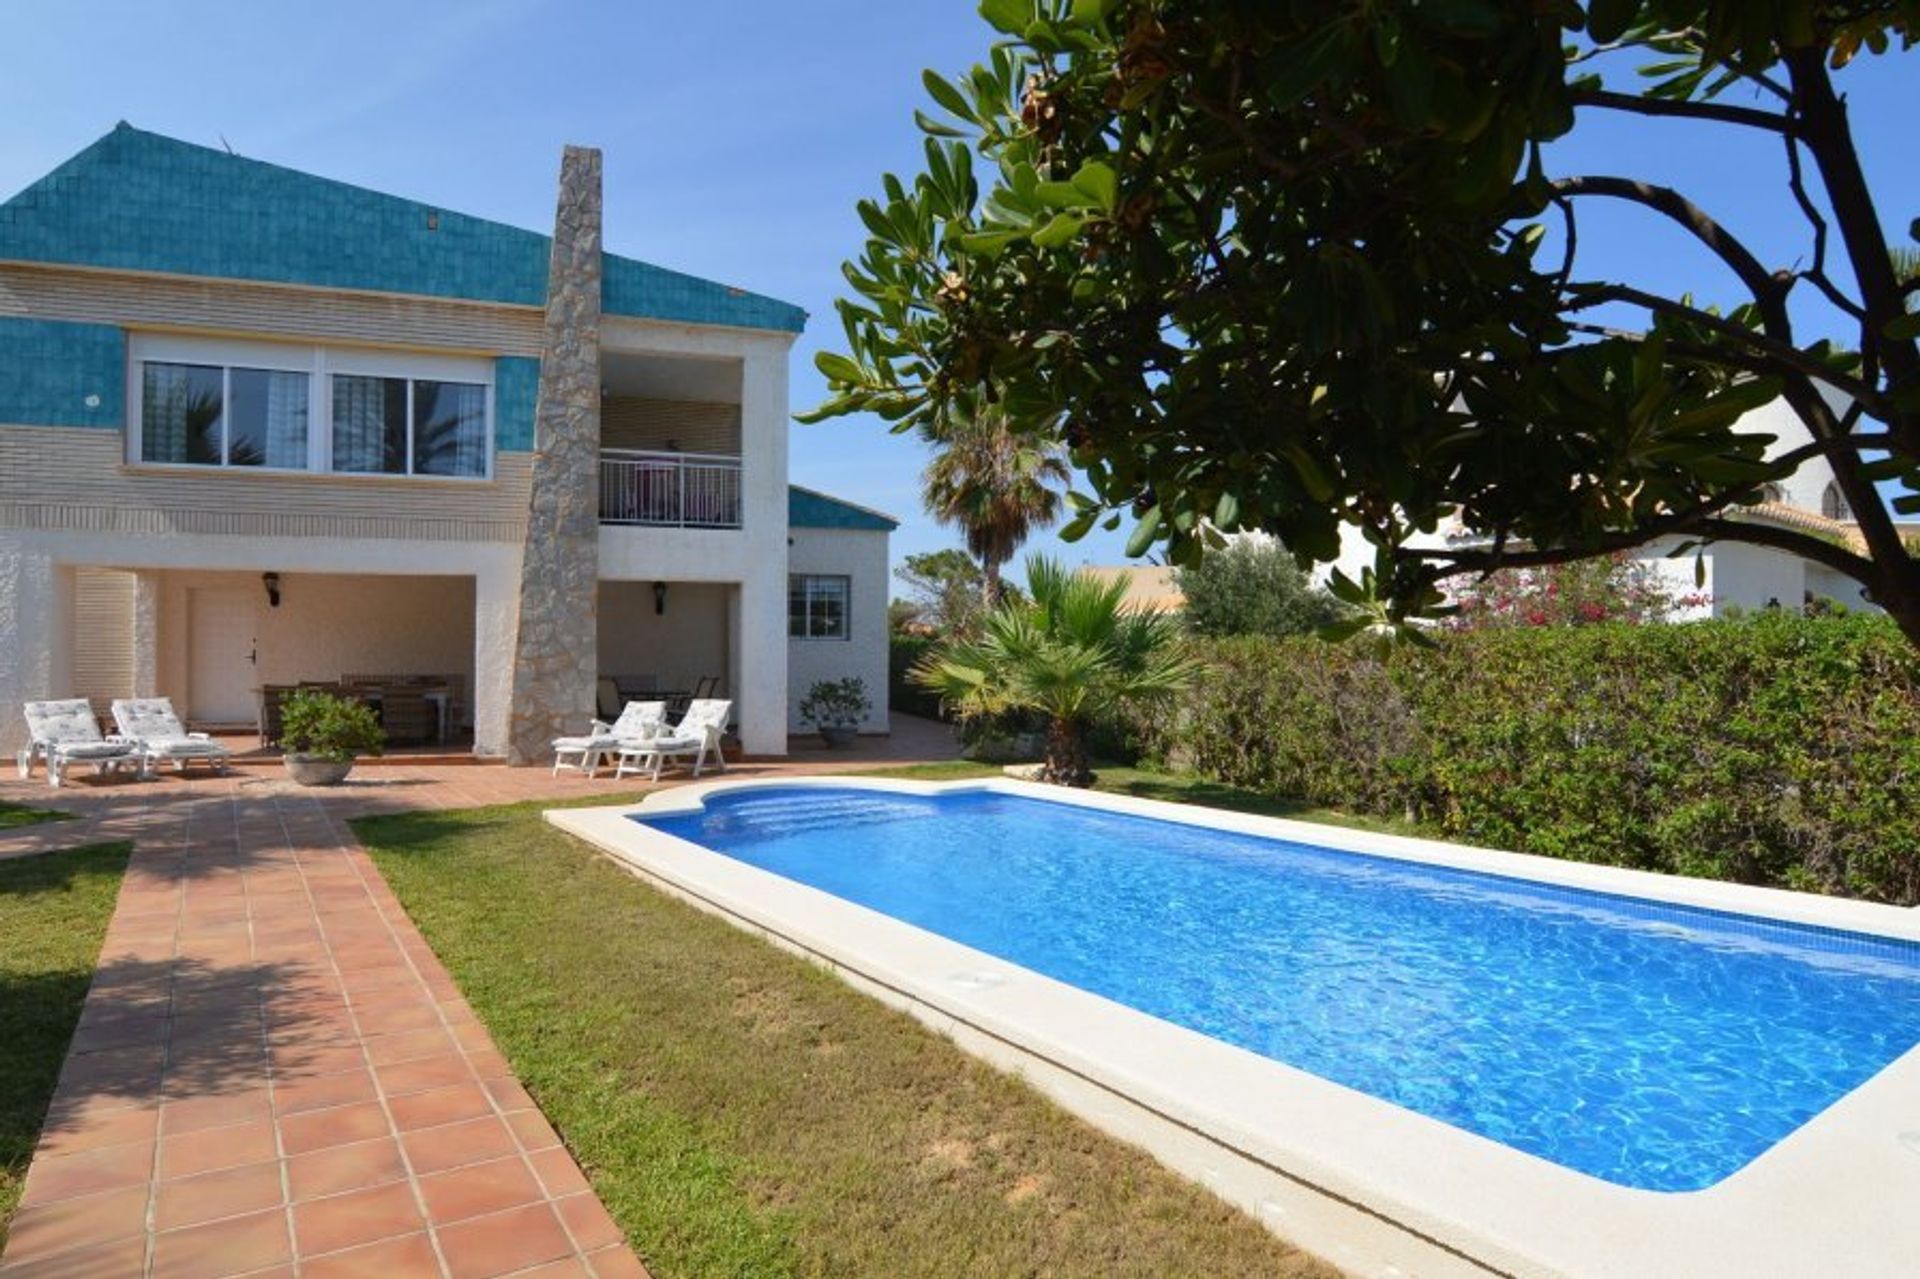 Explore our villas with private pools in La Zenia near the golf and beaches